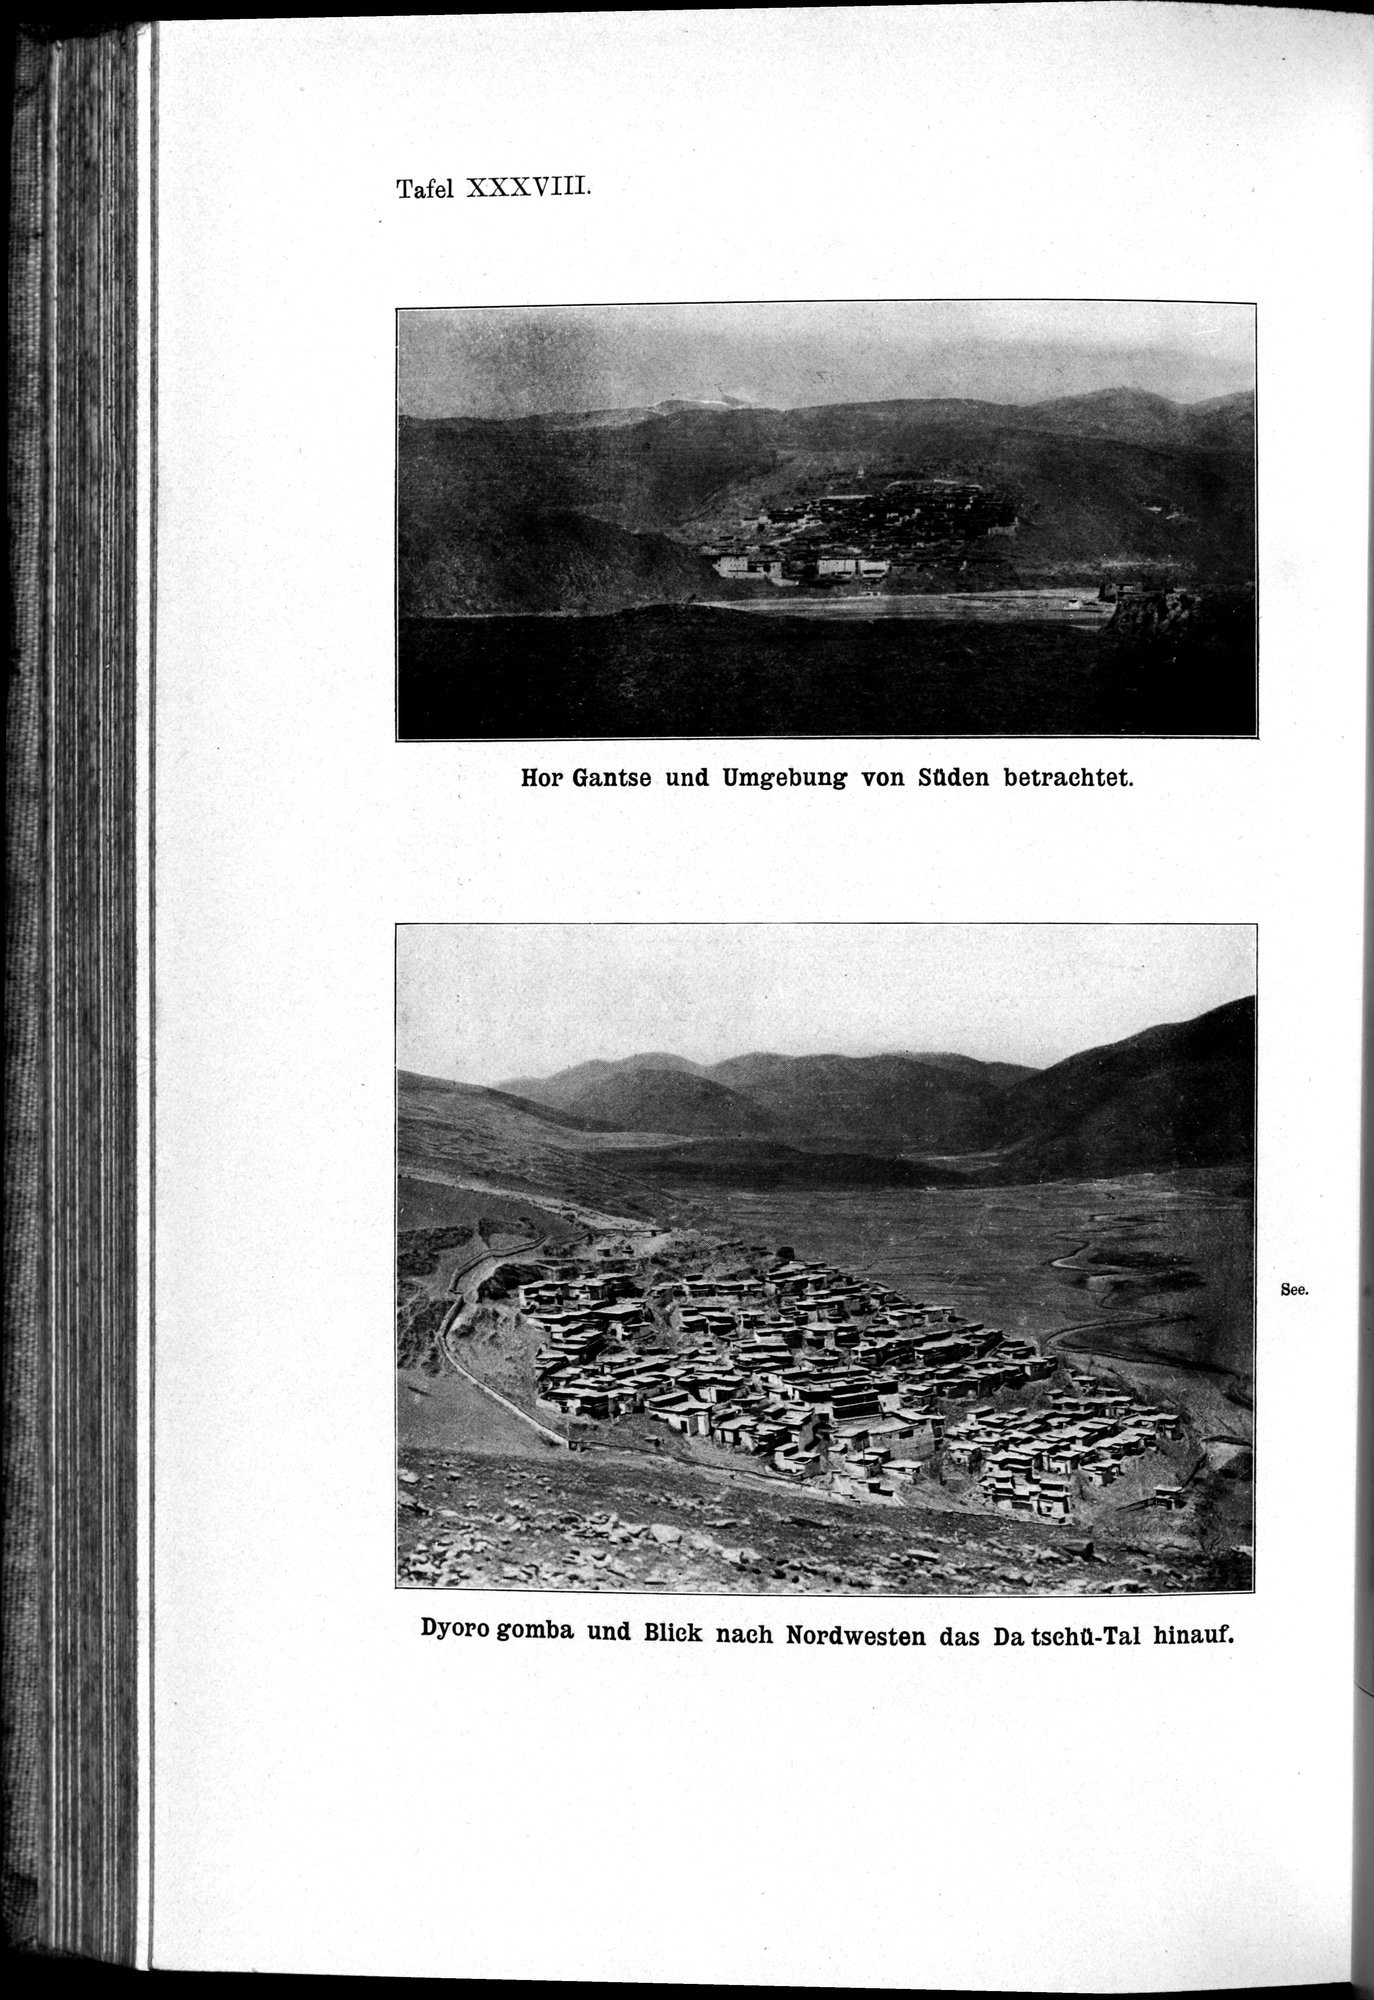 Meine Tibetreise : vol.2 / Page 224 (Grayscale High Resolution Image)